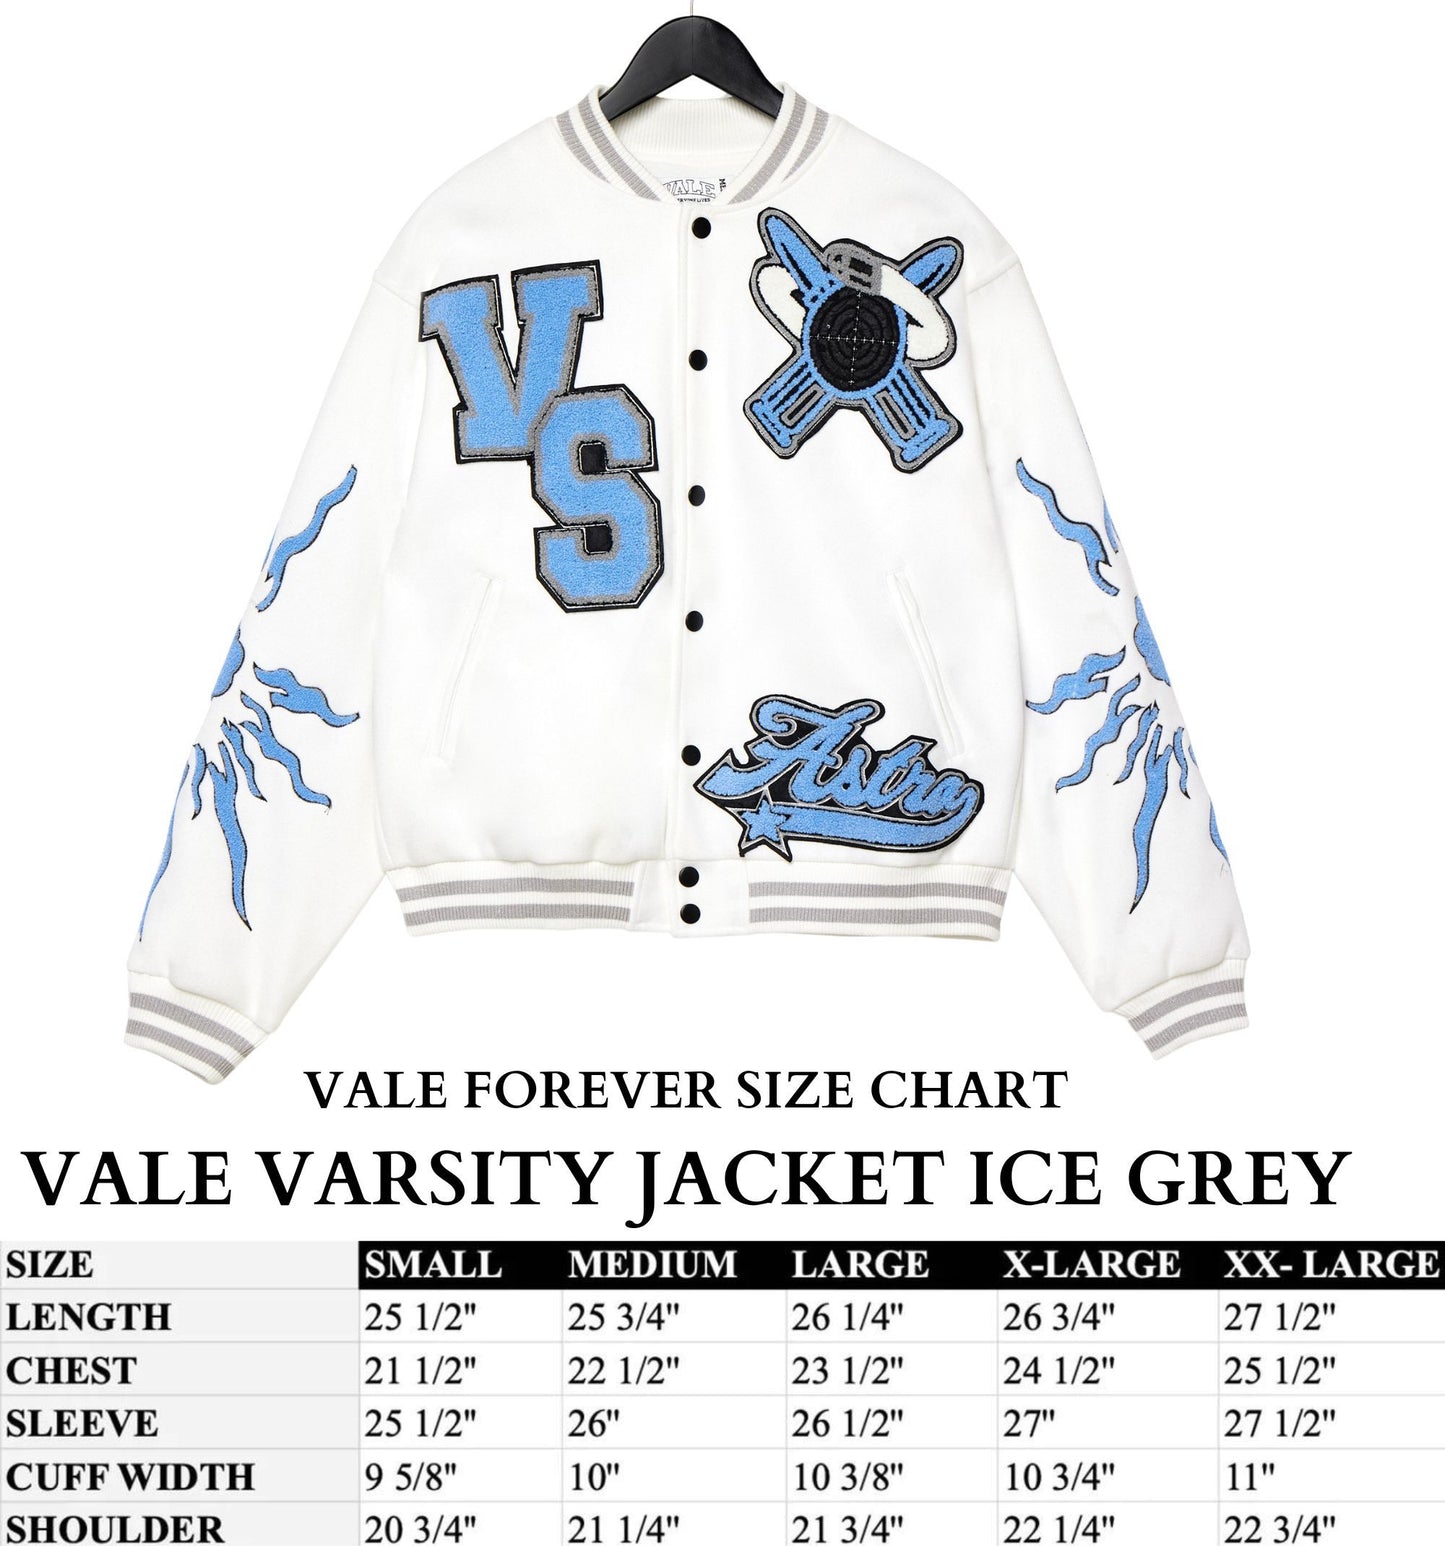 VALE VARSITY JACKET ICE GREY